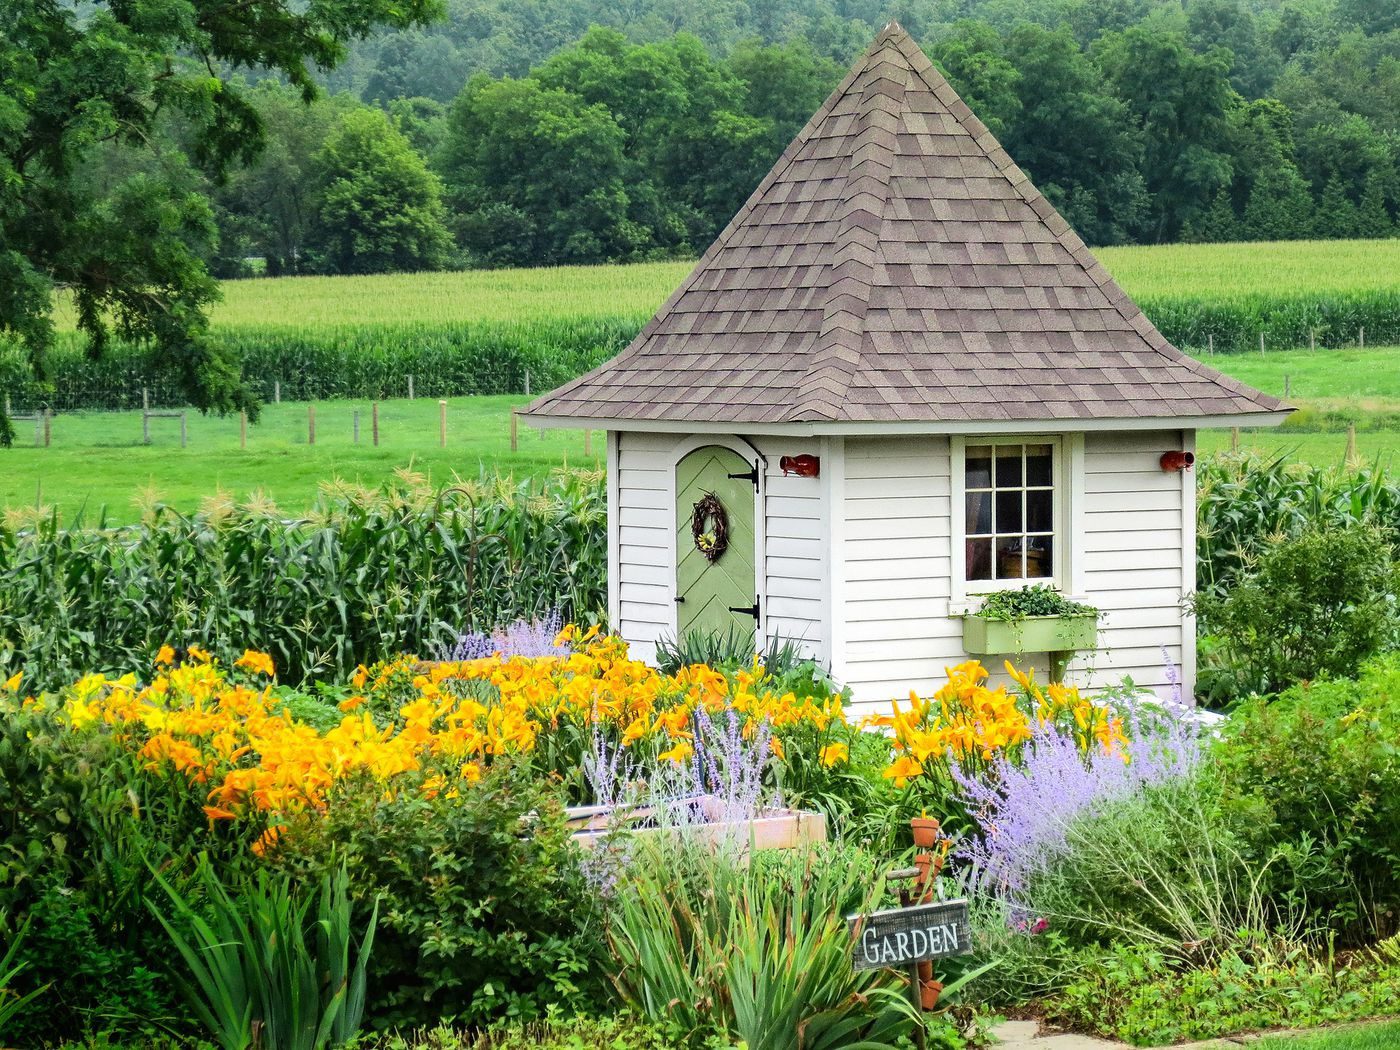 Garden Shed Ideas for Small Home Gardens